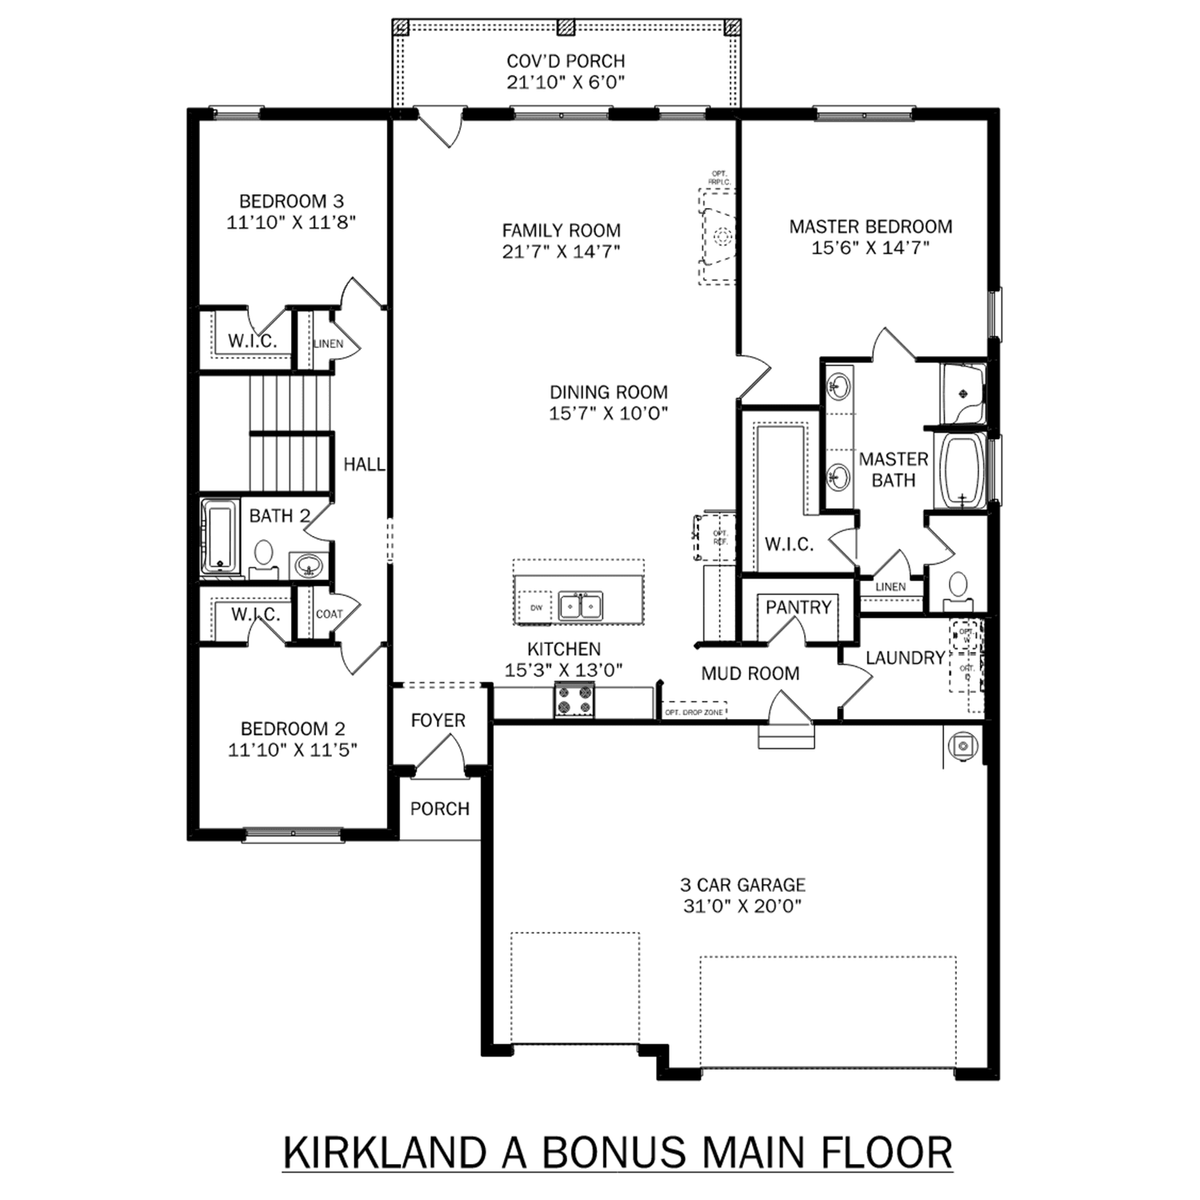 1 - The Kirkland with Bonus buildable floor plan layout in Davidson Homes' River Road Estates community.